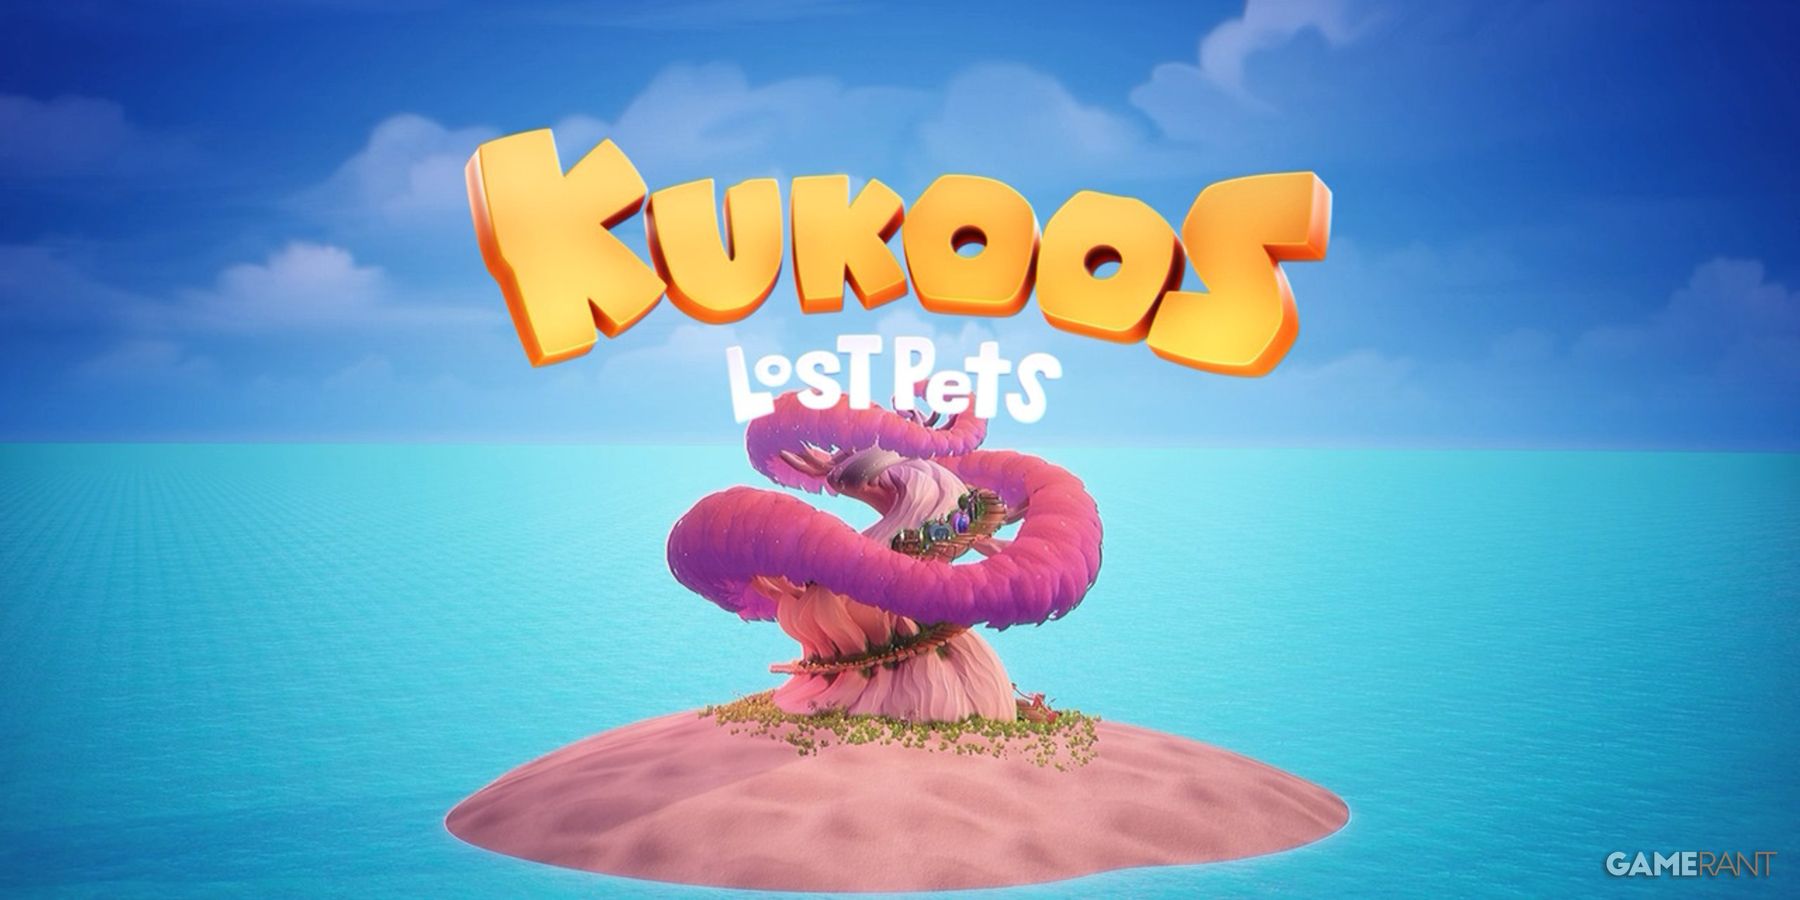 kukoos lost pets switch opening splashscreen island